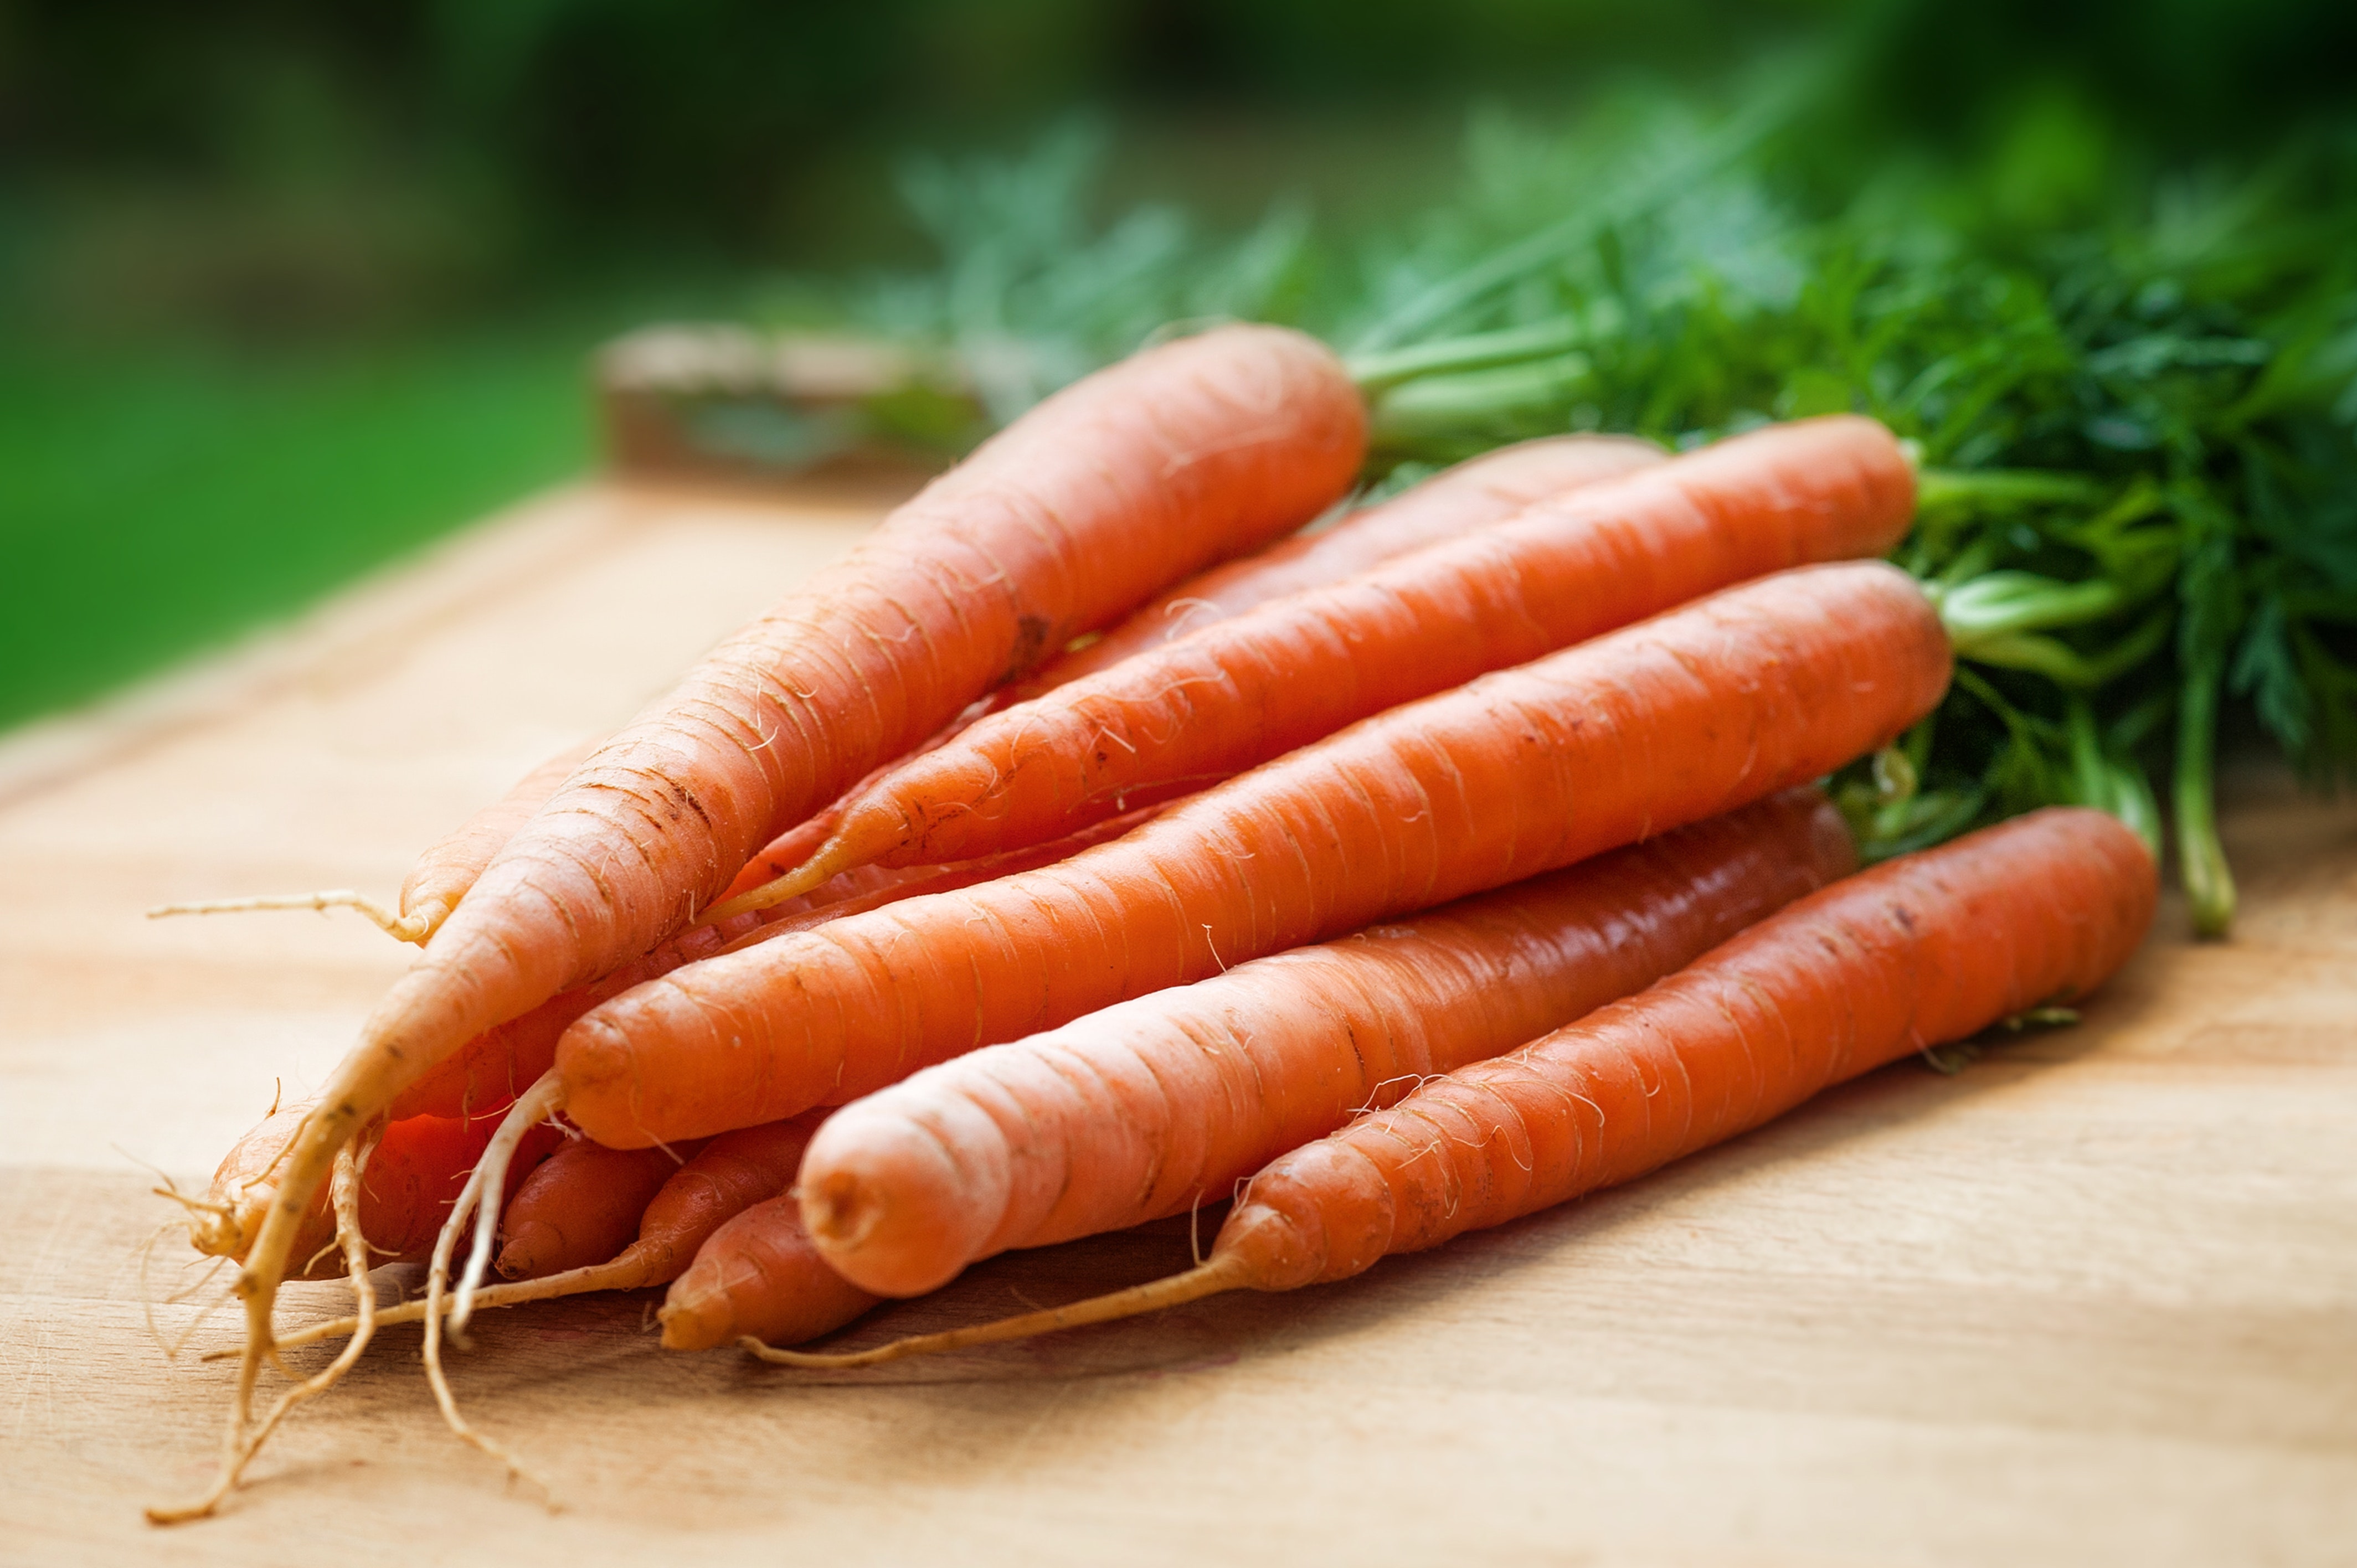 Orange Carrots on Table, Agriculture, Ingredients, Vegetarian, Vegetable, HQ Photo